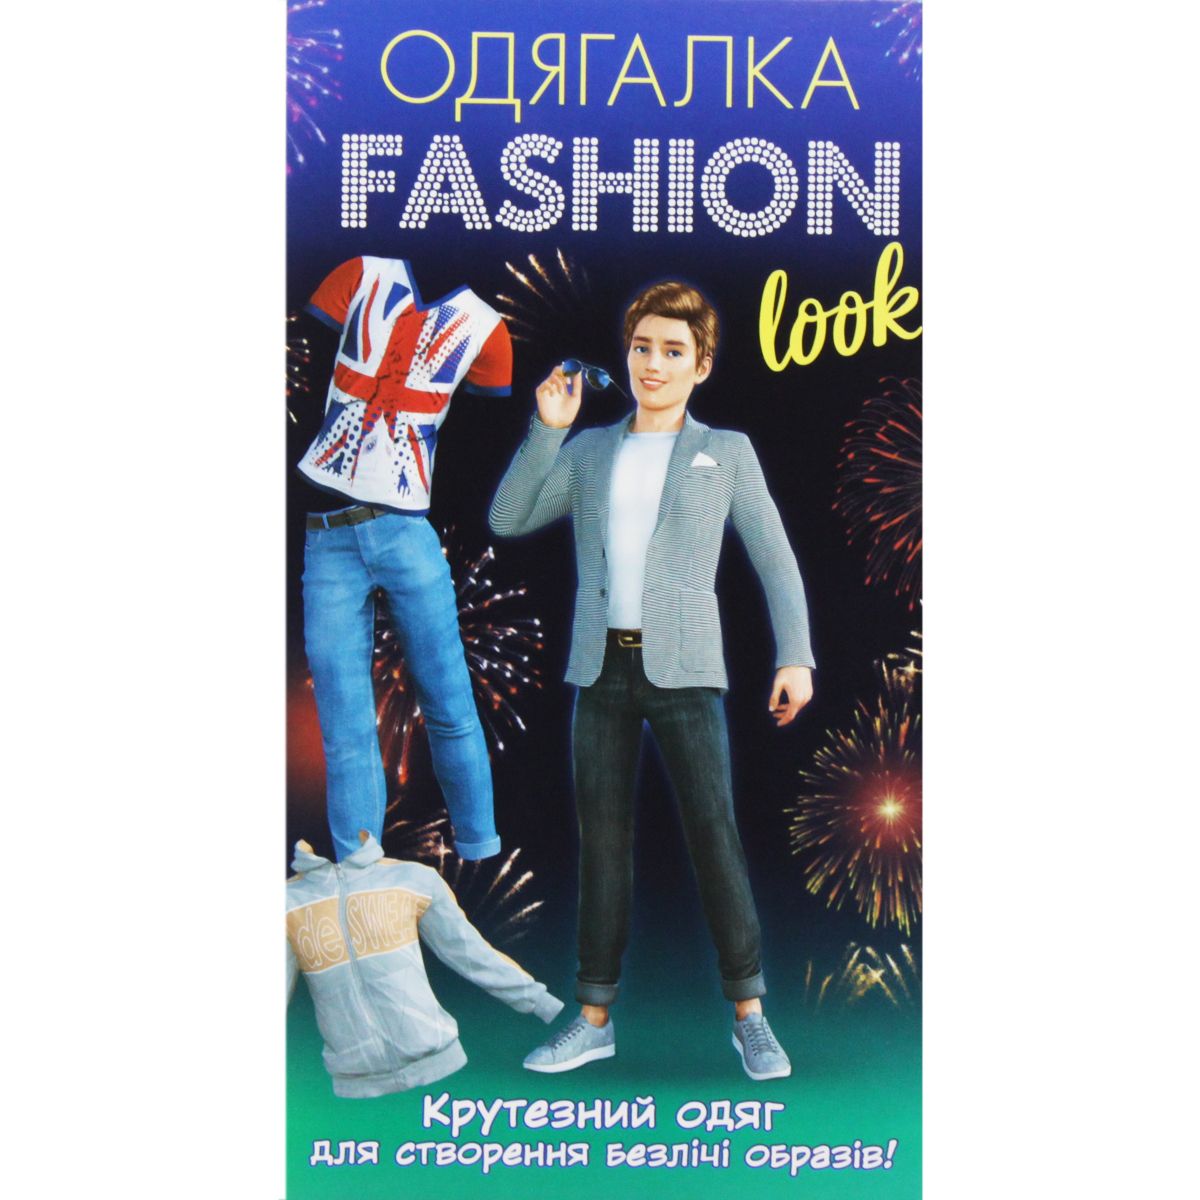 Набор-одевалка "Fashion look: Крутая одежда"